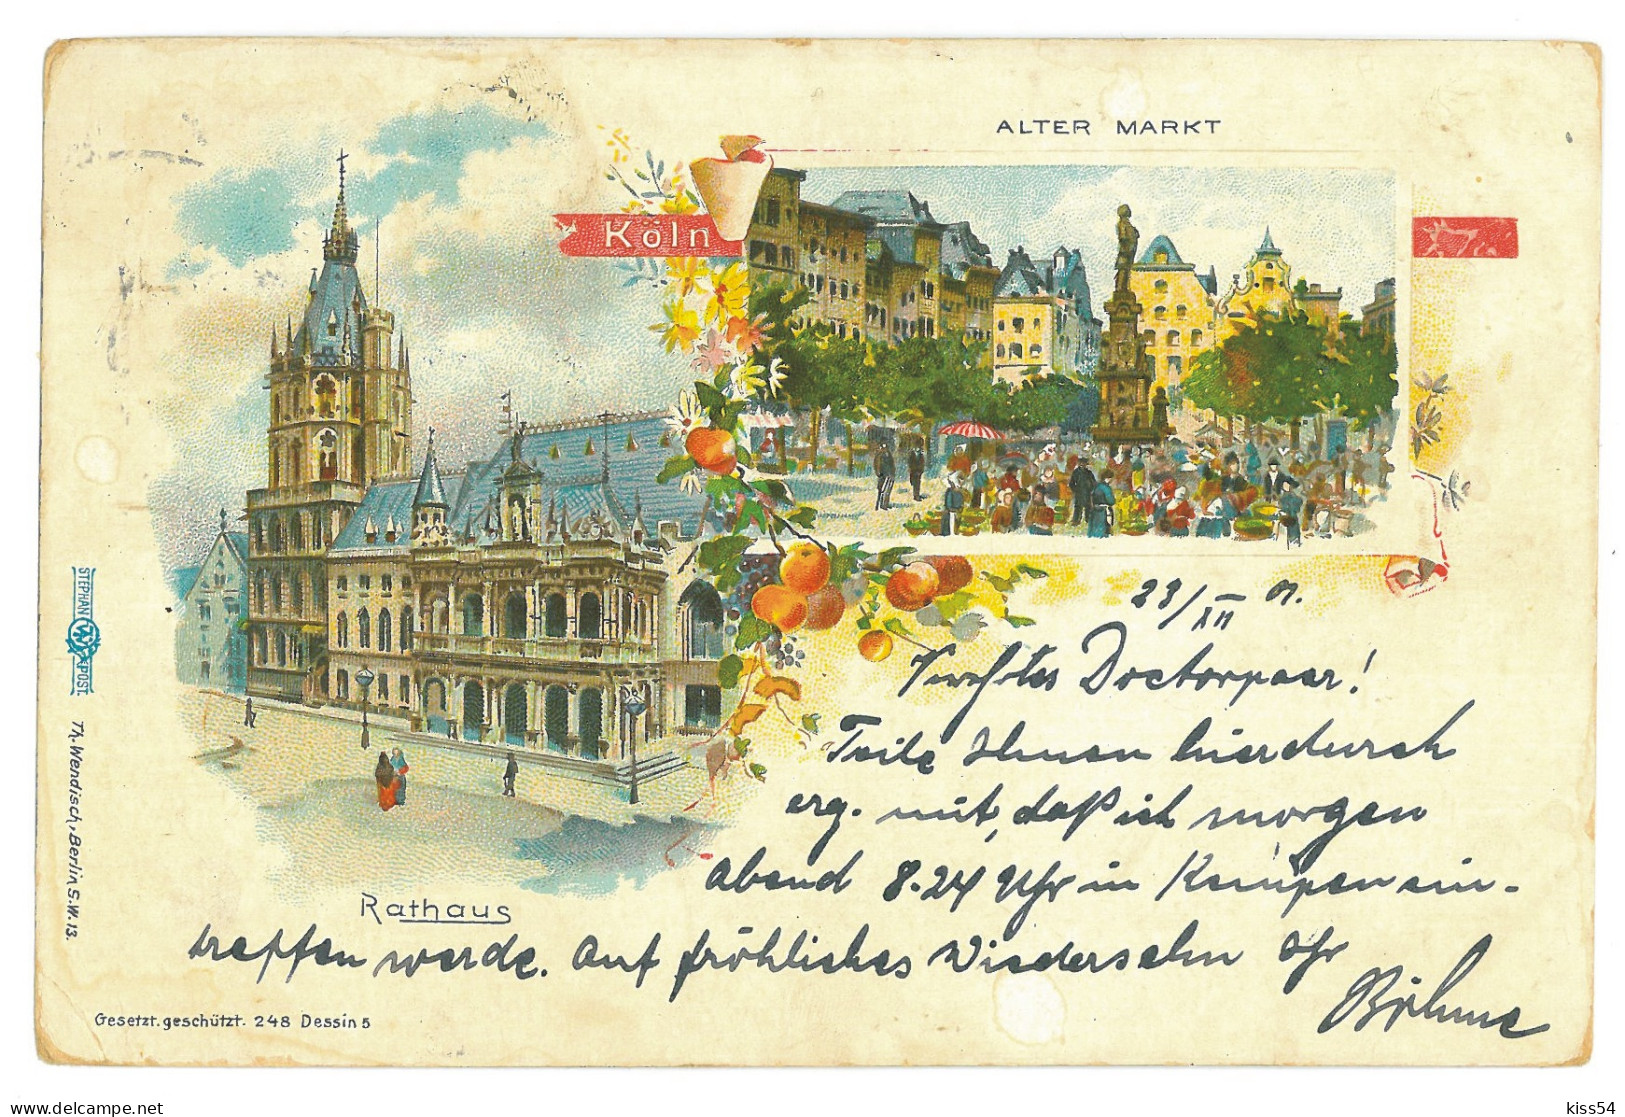 GER 1 - 16949 KOLN, Litho, Germany - Old Postcard - Used - 1901 - Koeln